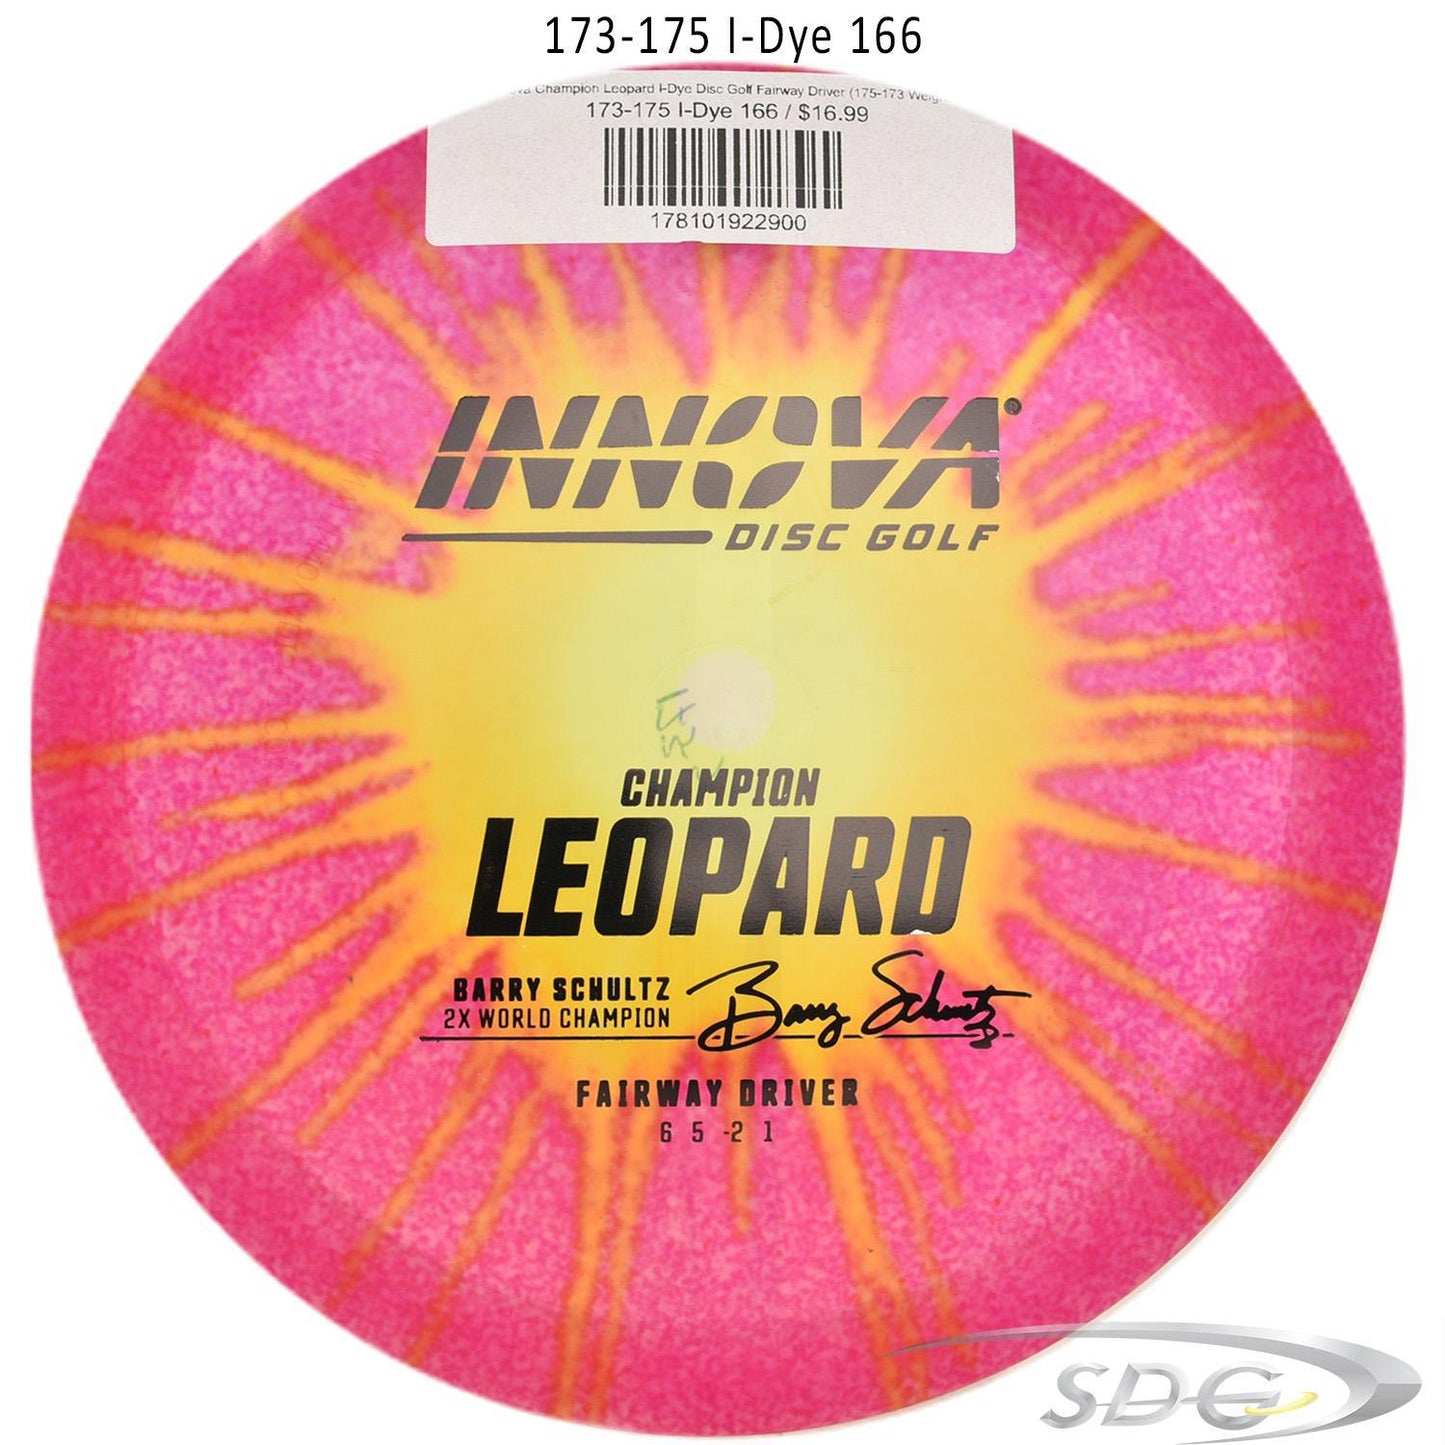 innova-champion-leopard-i-dye-disc-golf-fairway-driver 173-175 I-Dye 166 